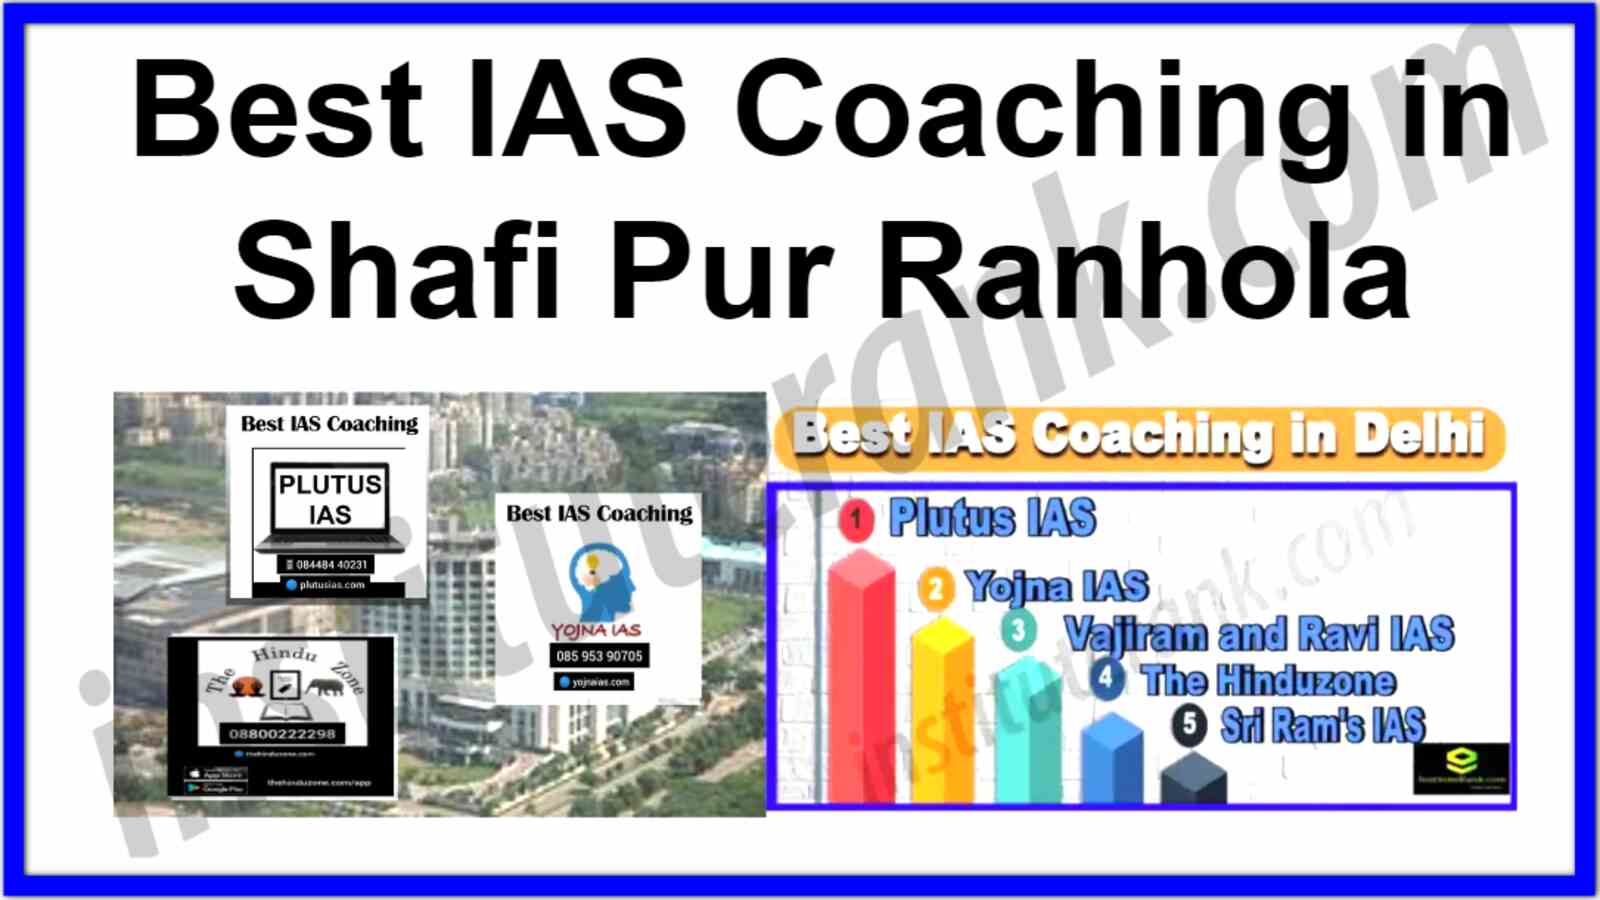 Best IAS Coaching in Shafi Pur Ranhola